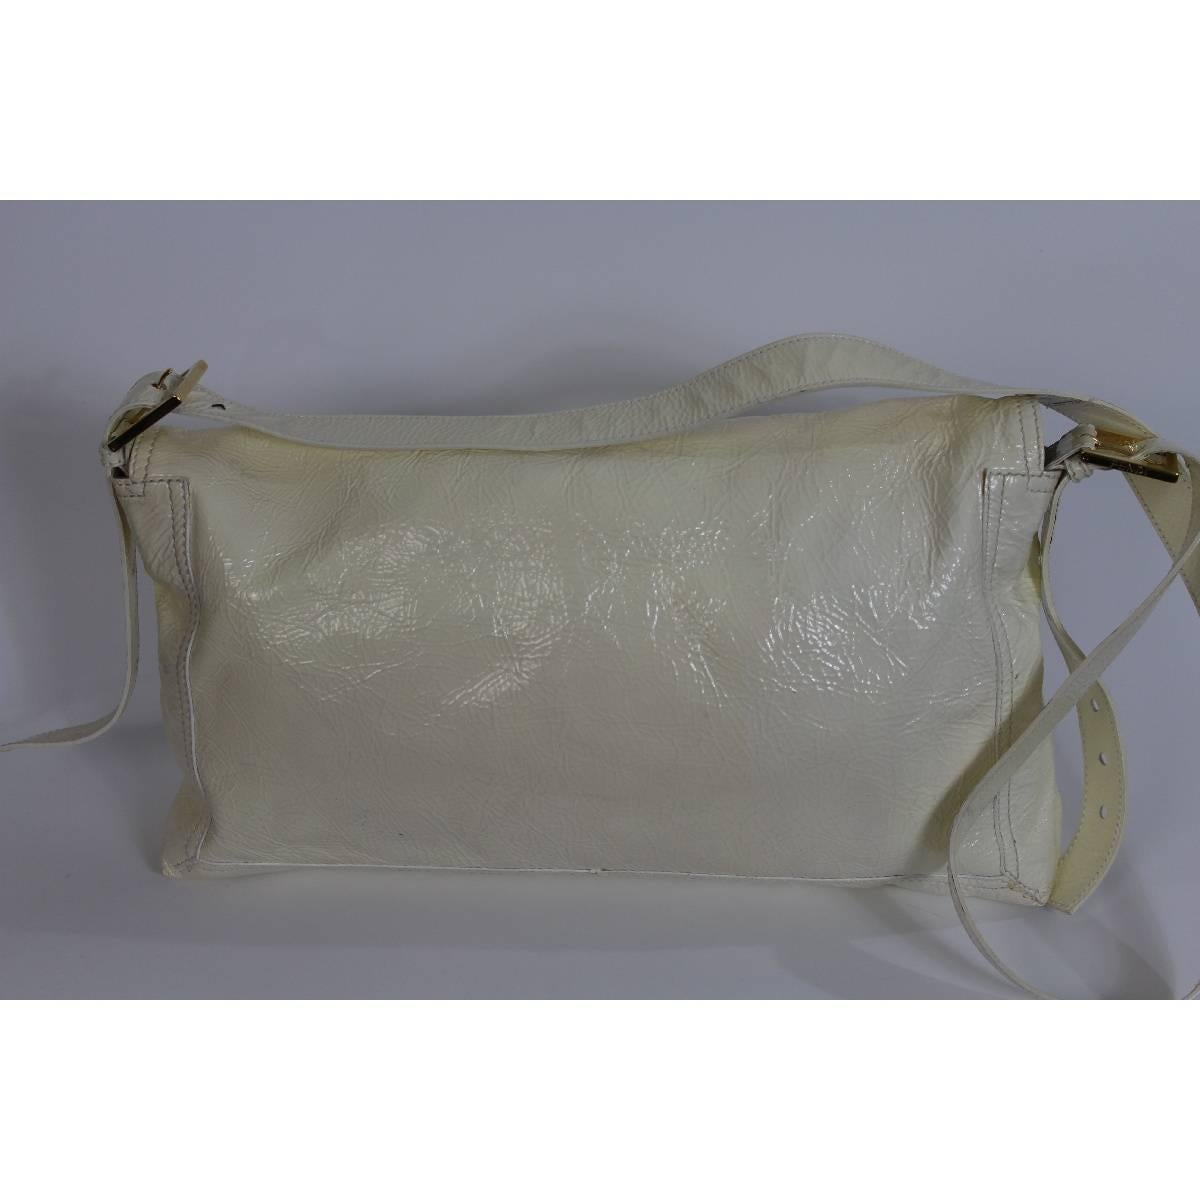 Fendi vintage patent leather white shoulder bag, jumbo baguette pattern, double F logo closure gold color, gold details, inside pocket. Made italy. Excellent conditions.

Code: 237288T137VVA088
Measures:
Height: 20 cm
Width: 41 cm
Depth: 7.5